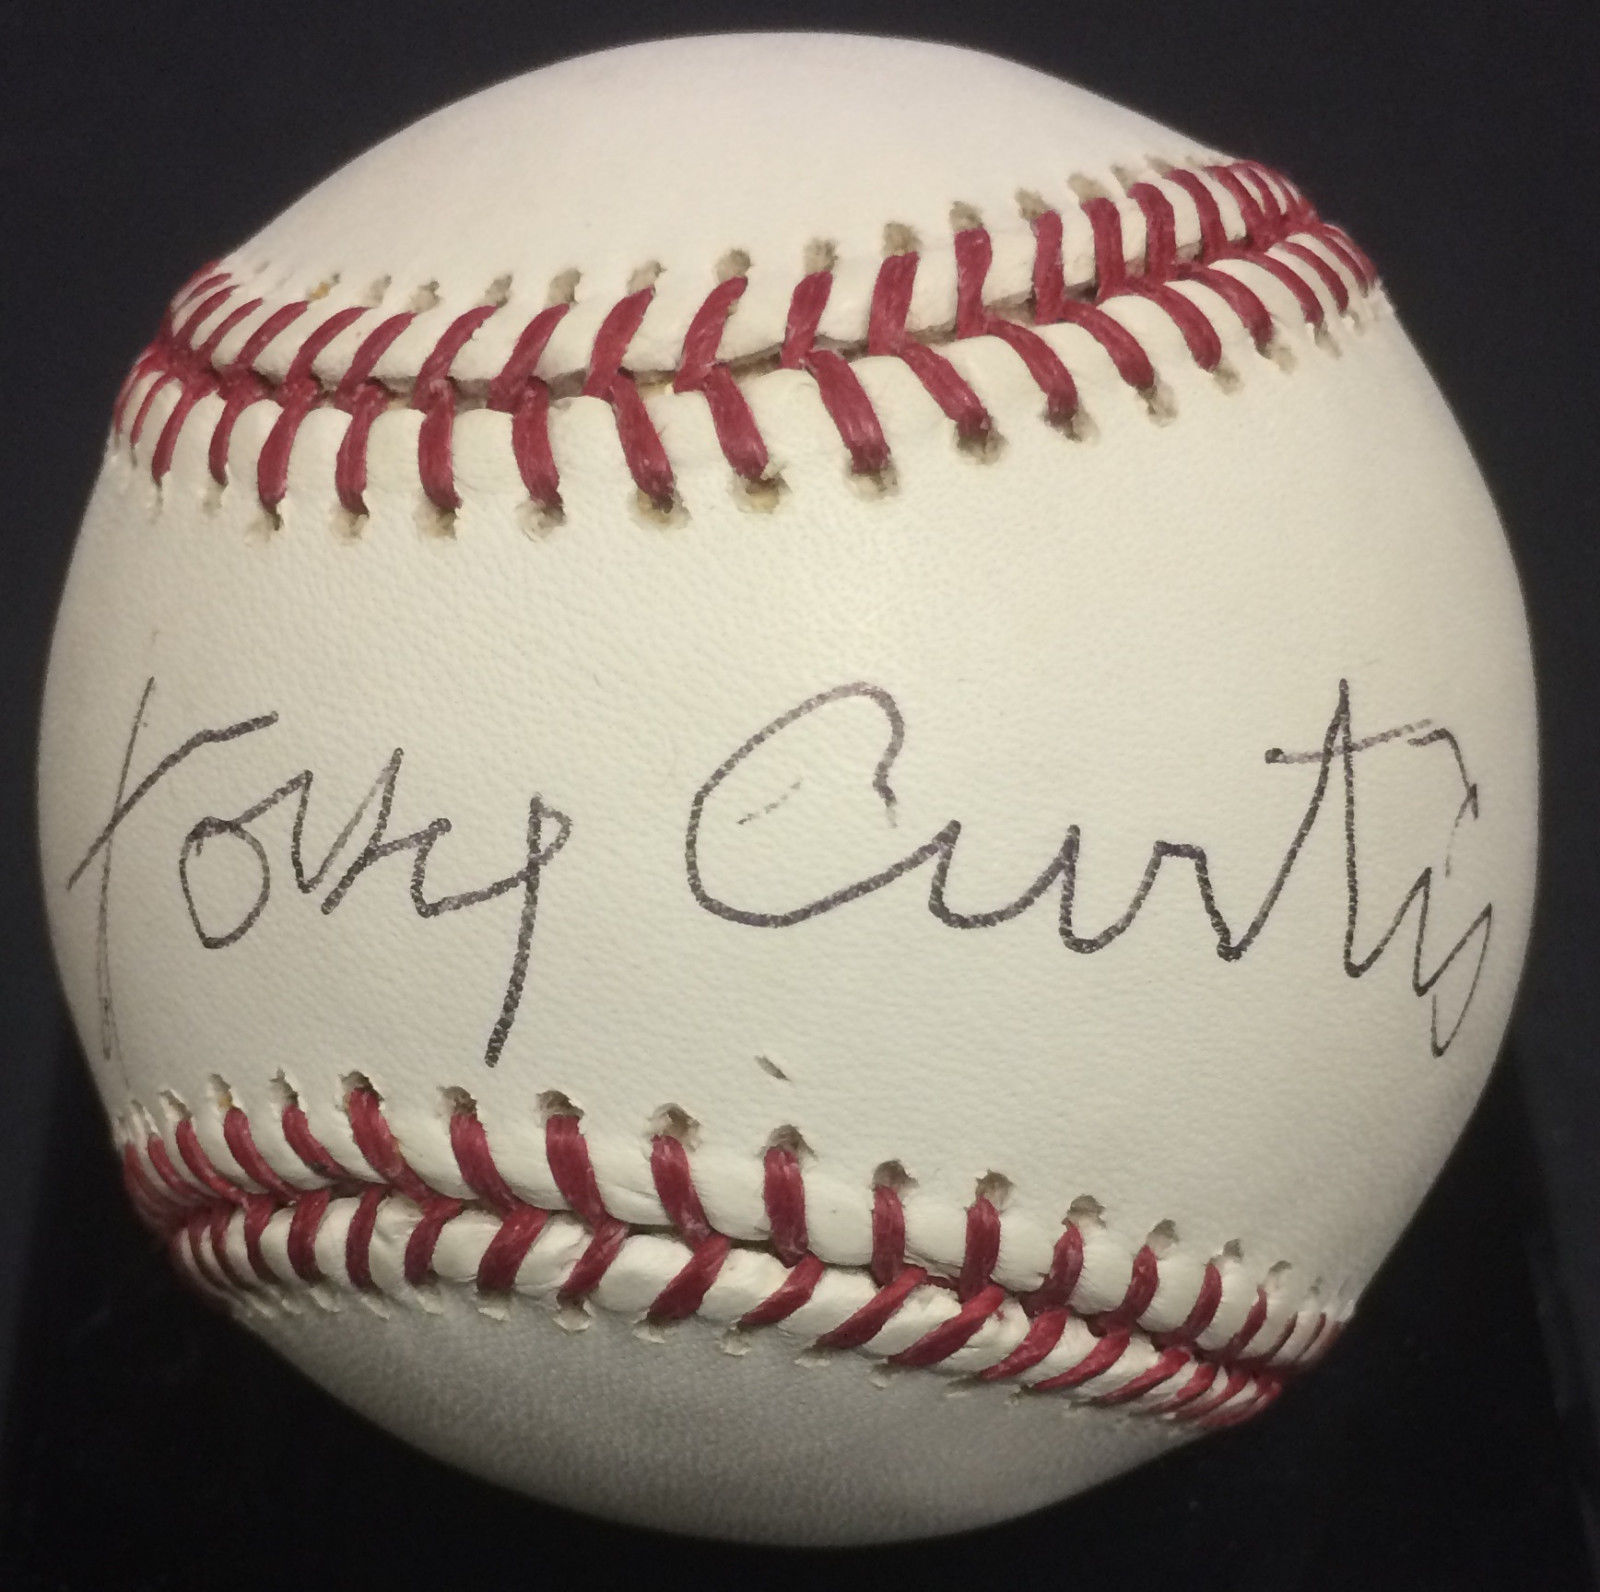 Tony Curtis Some Like it Hot actor signed official MLB Baseball auto JSA COA